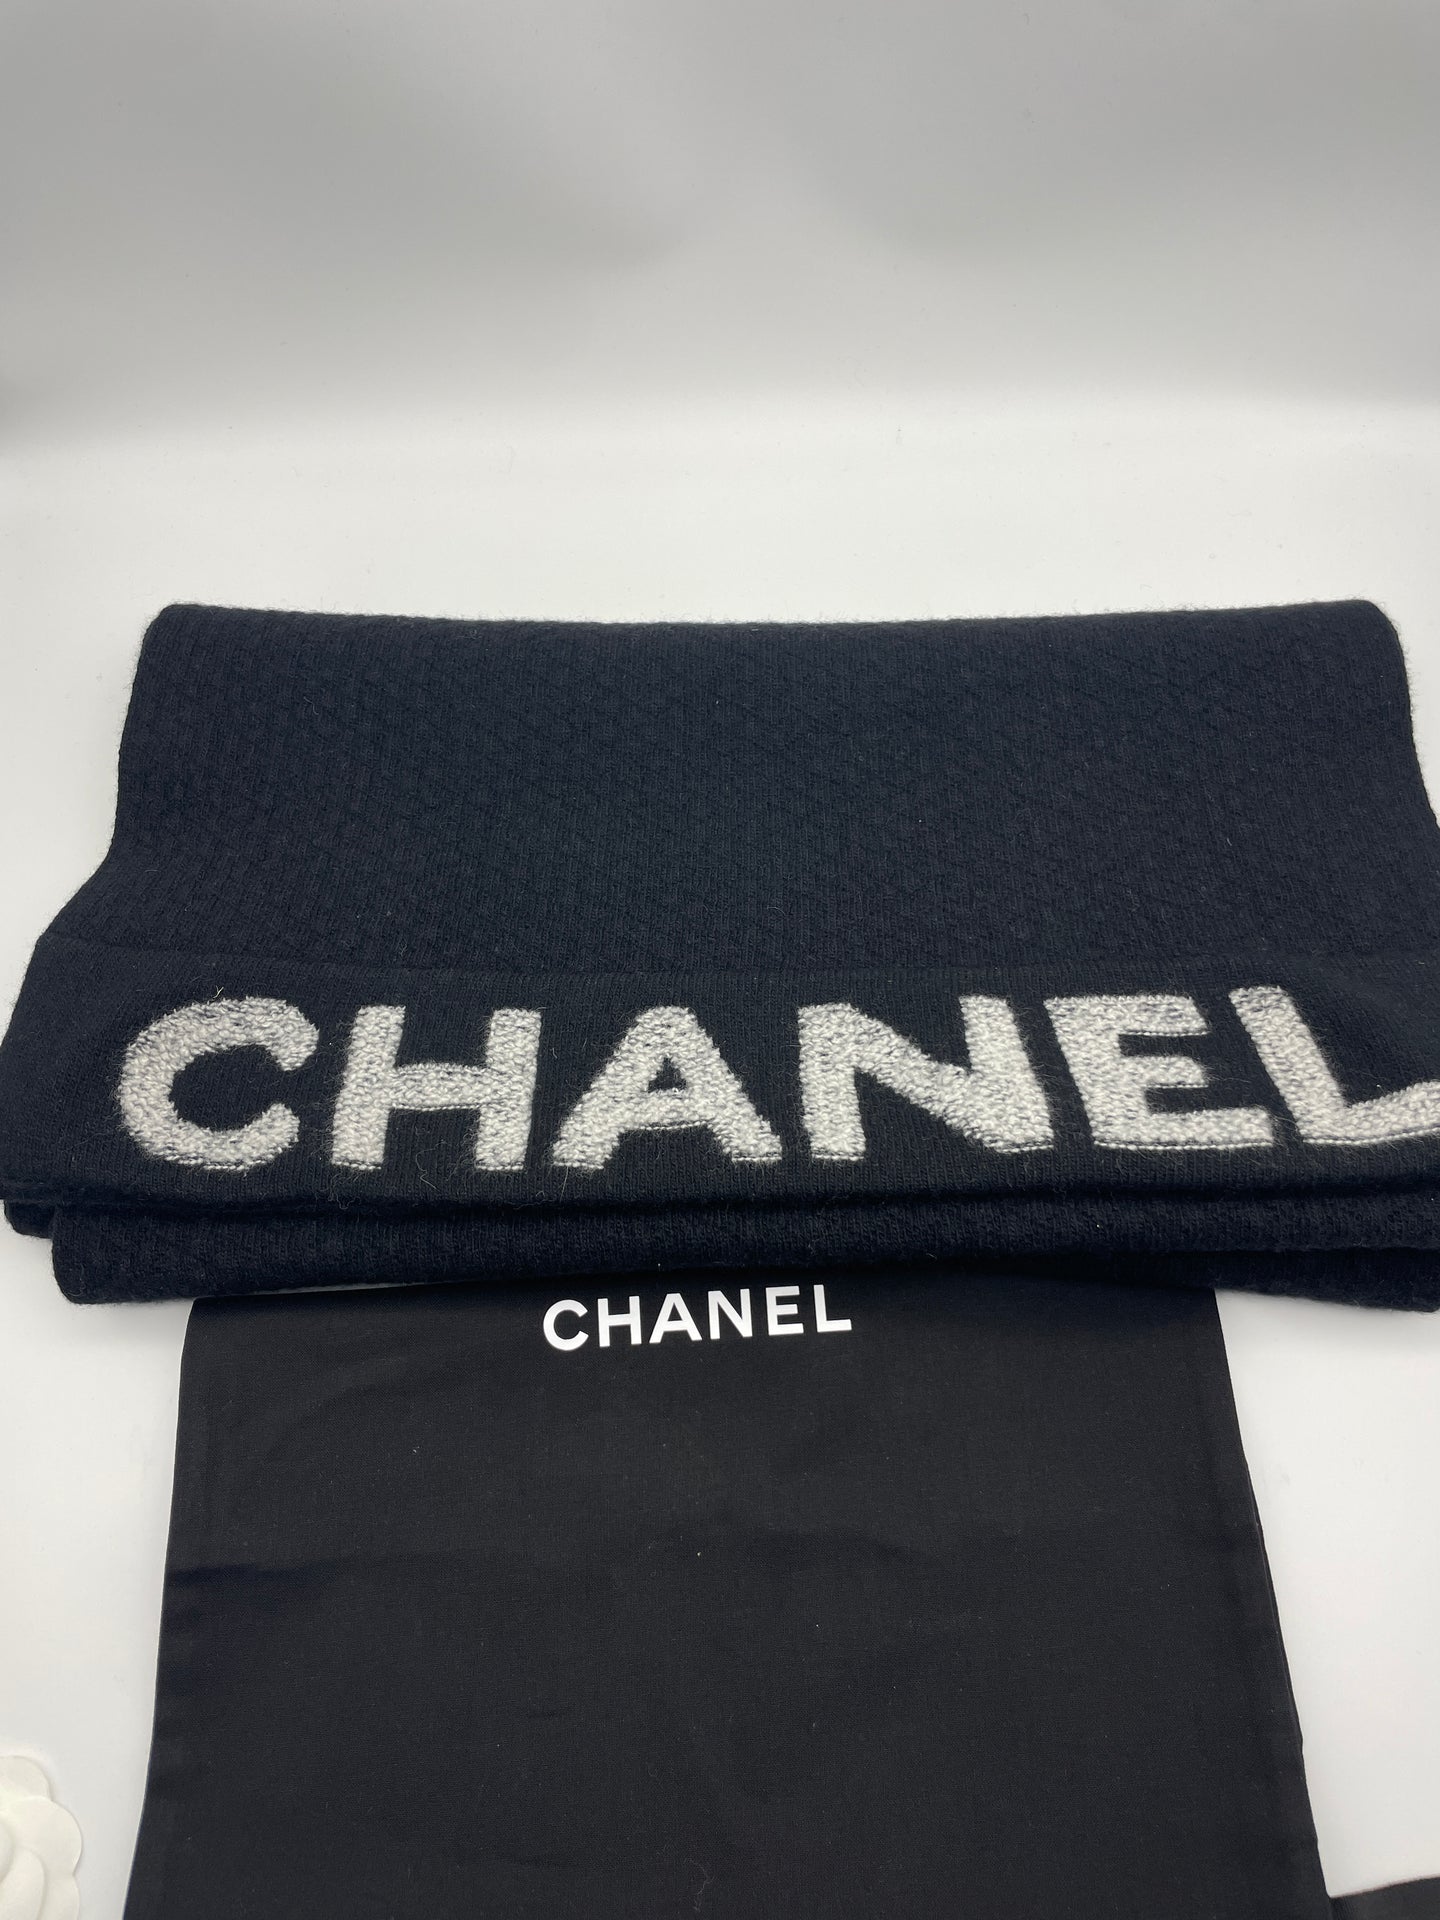 Chanel Black Textured Wool Cashmere Scarf